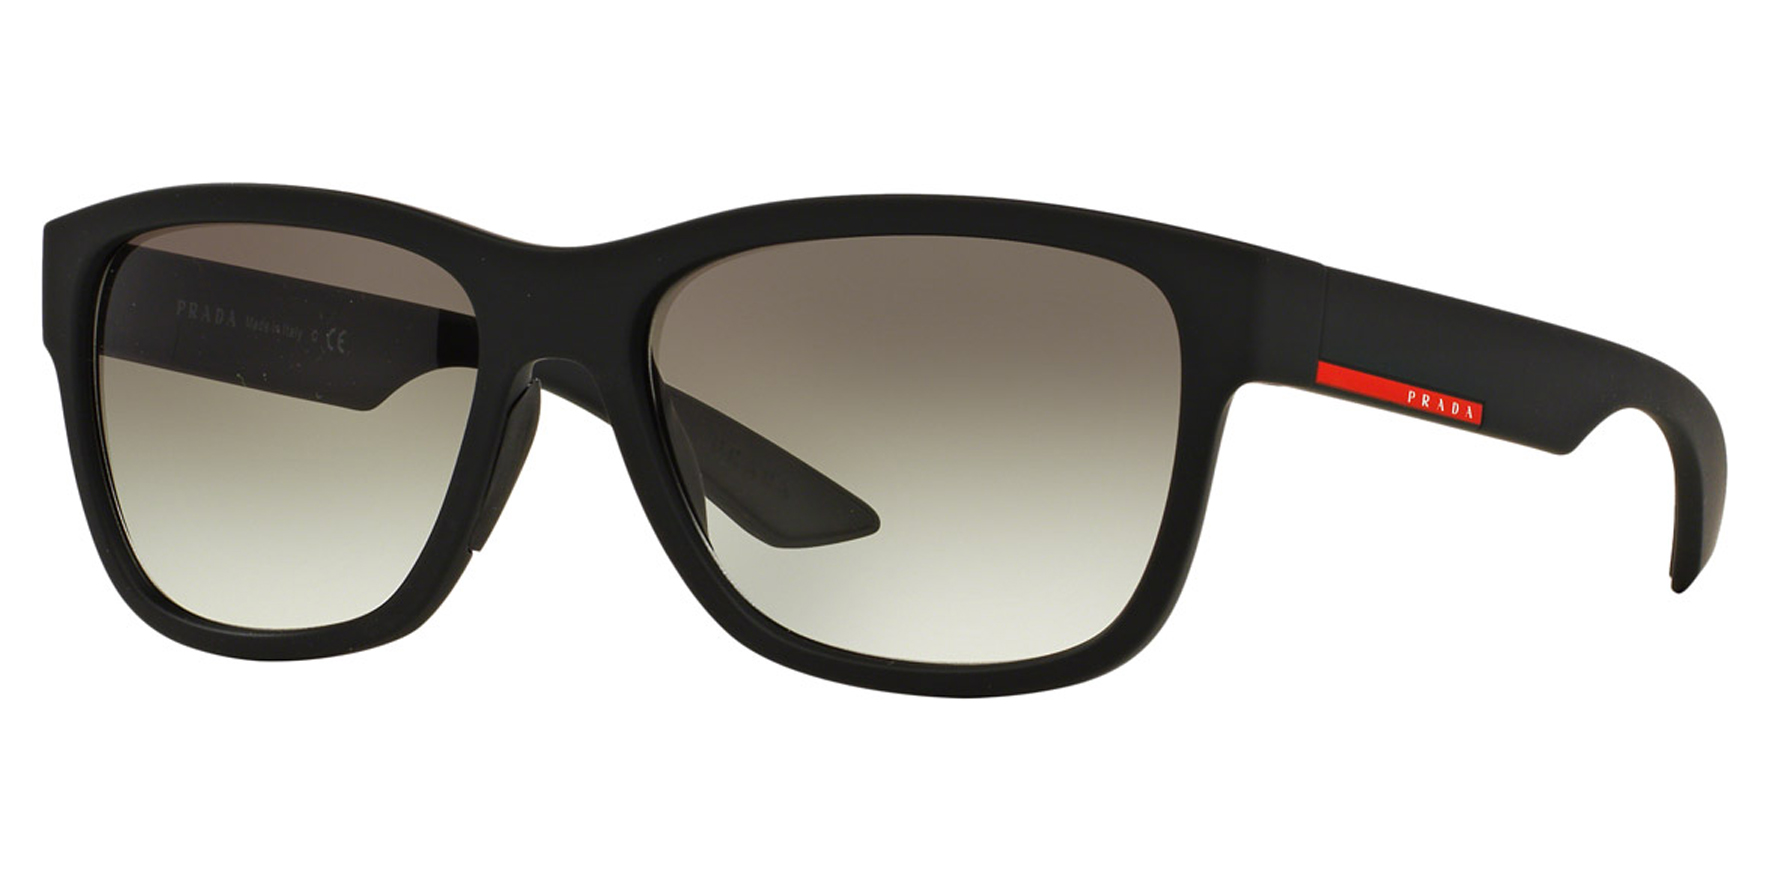 Prada Linea Rossa LifeStyle Sunglasses $75, Polarized Square $89 & more + Free Shipping